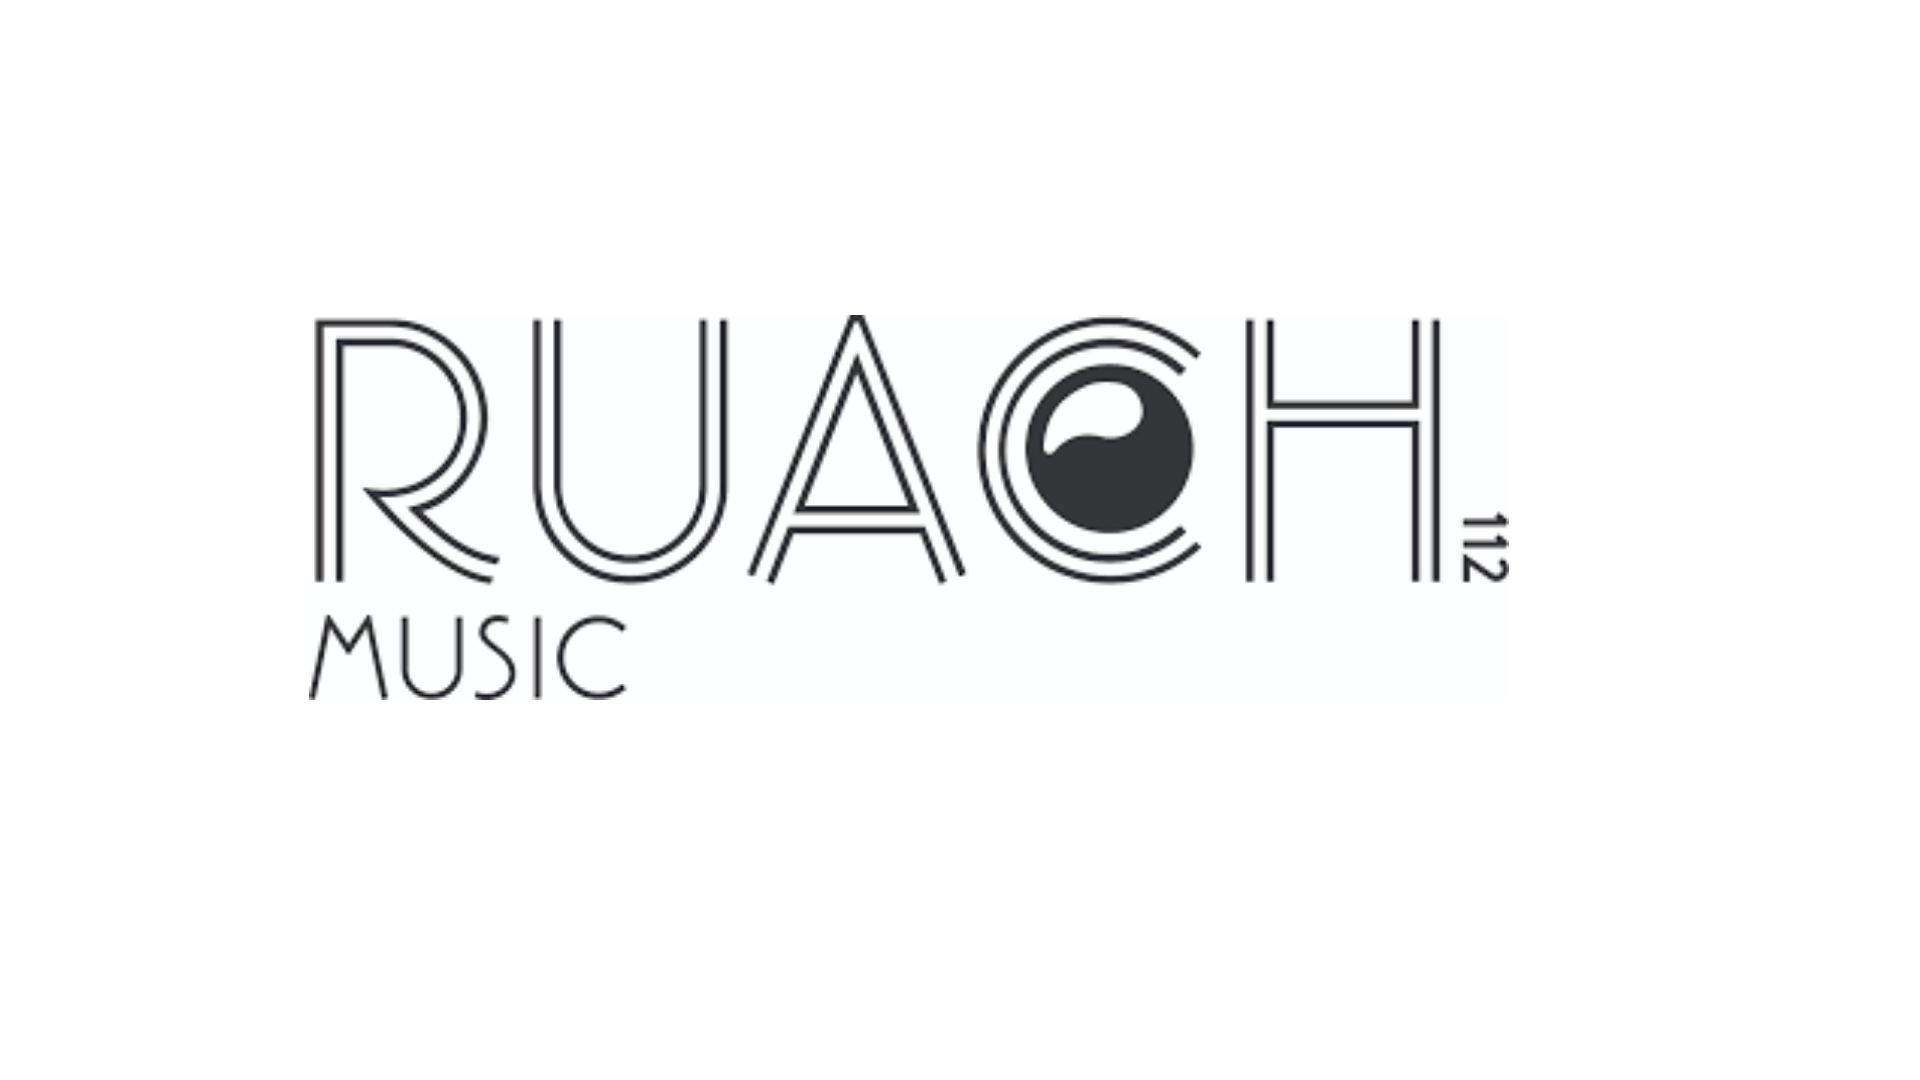 ruach logo done.jpg